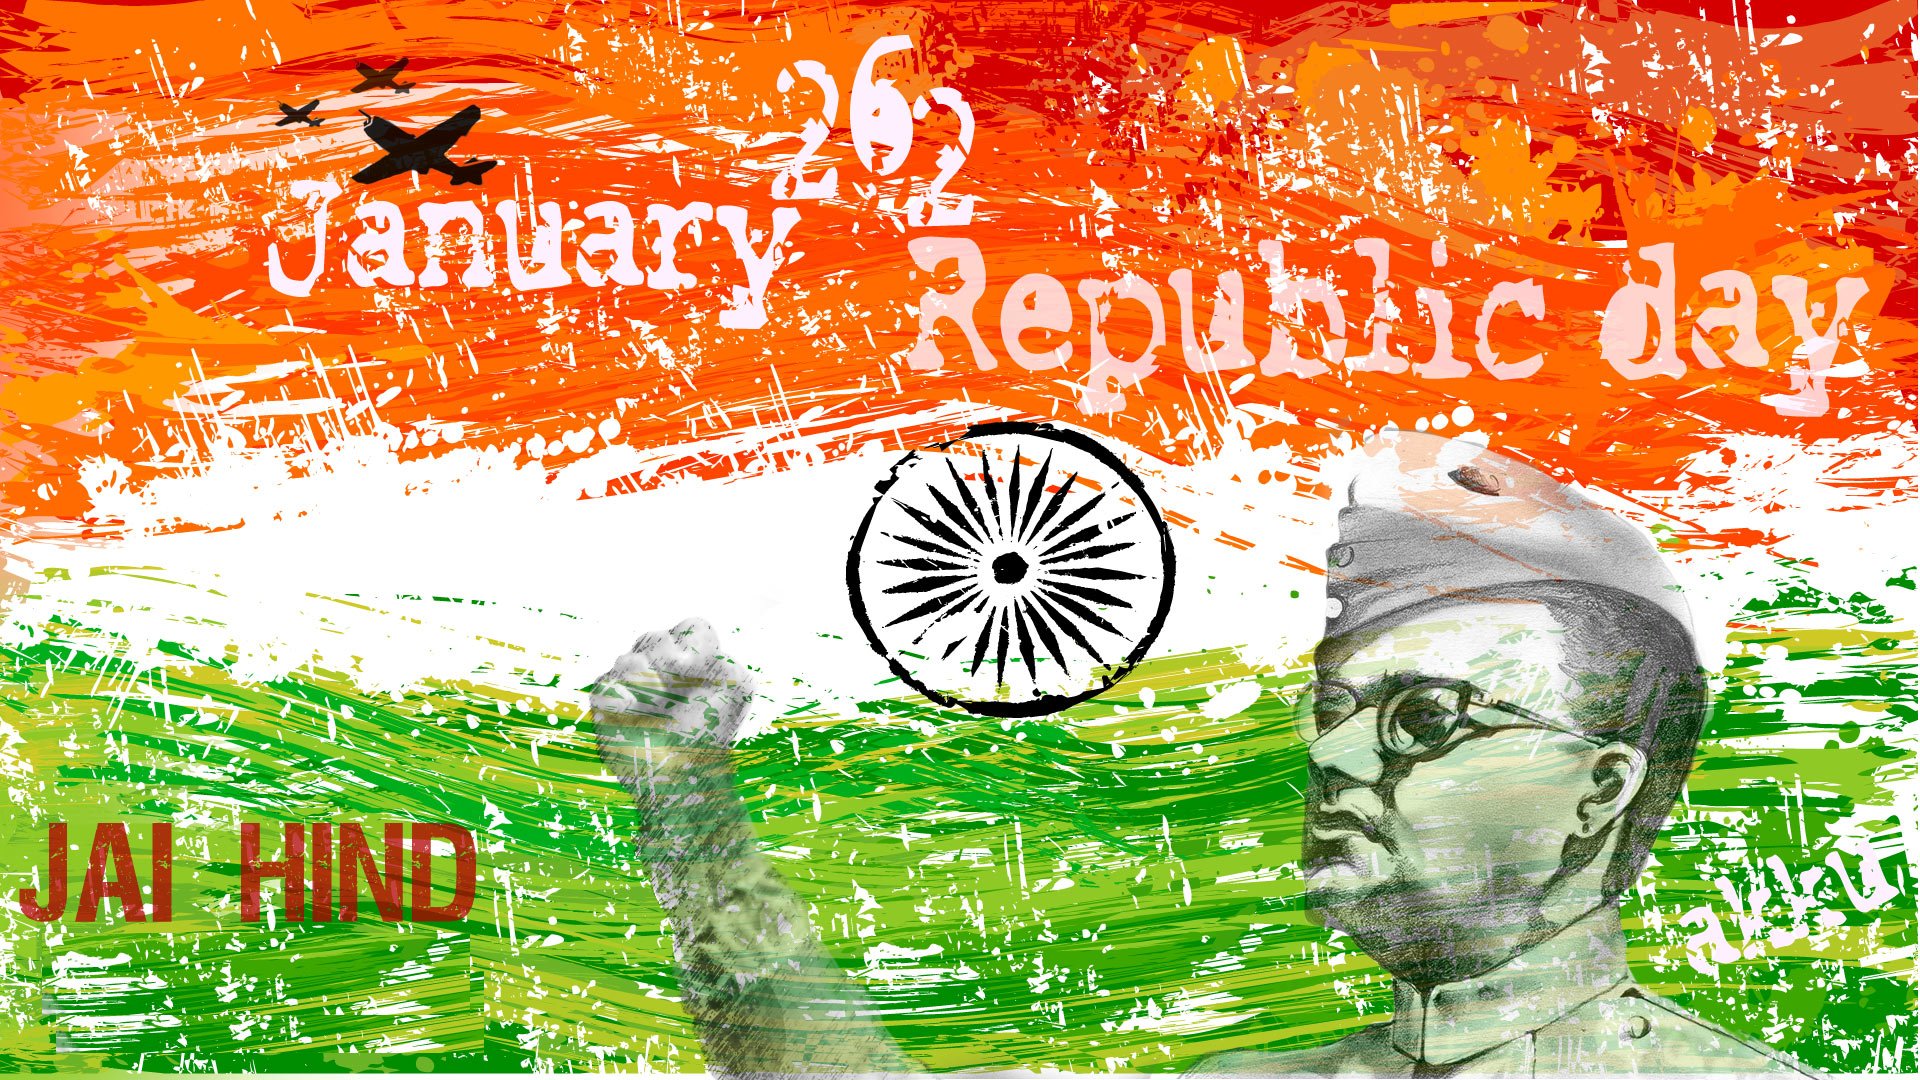 Republic day of india essay